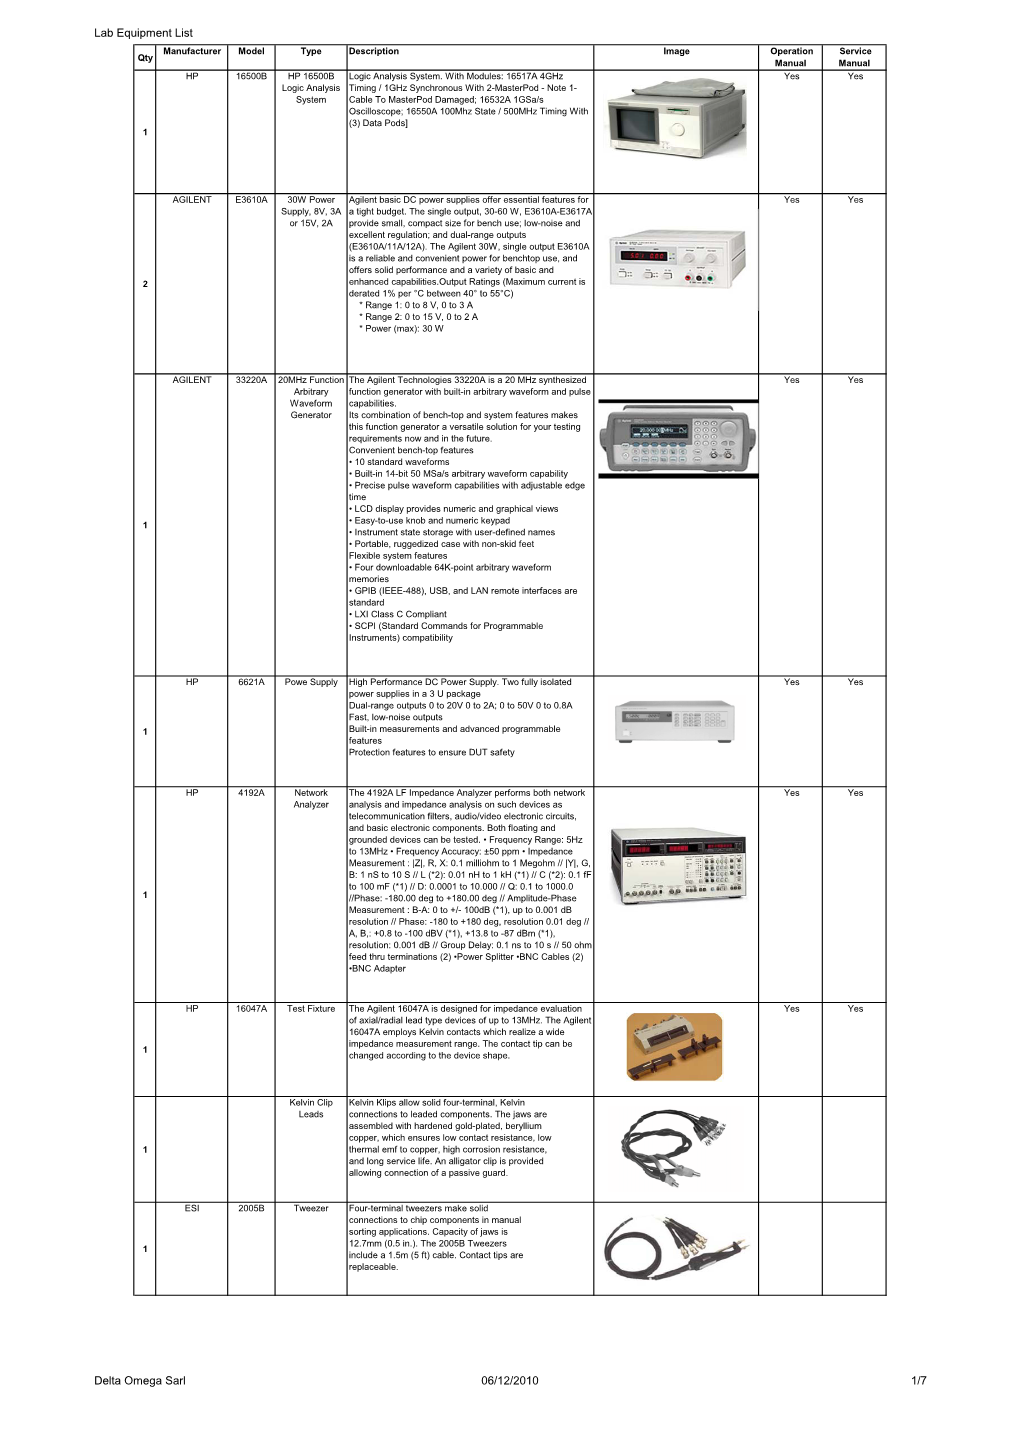 Lab Equipment List Delta Omega Sarl 06/12/2010